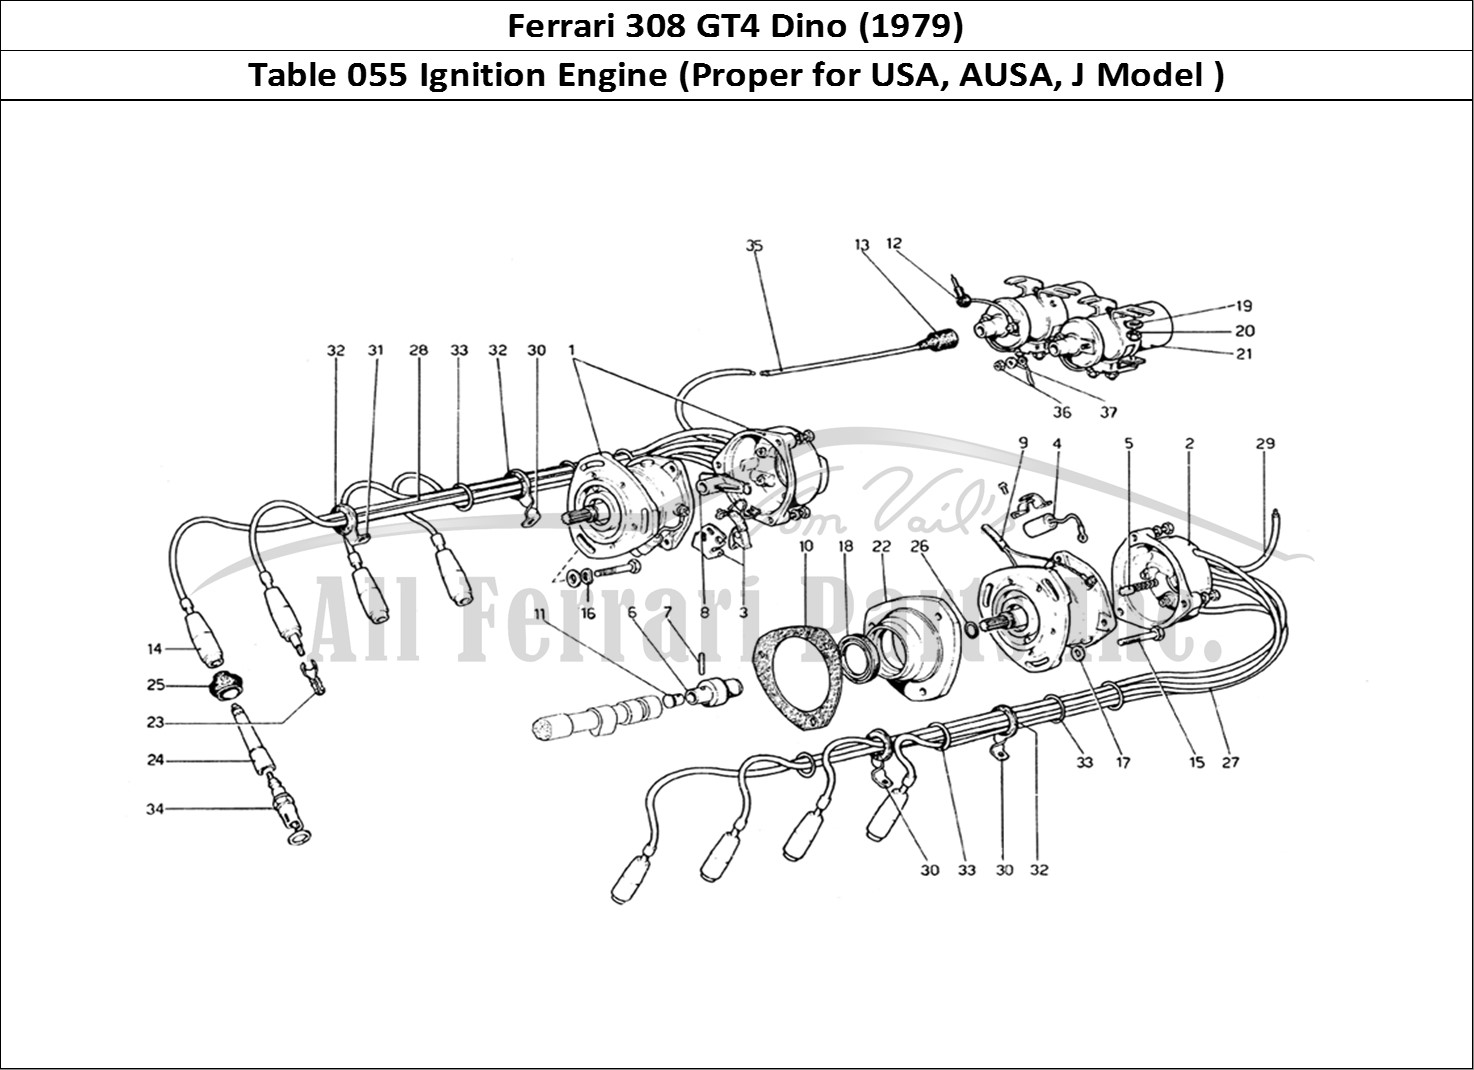 Ferrari Parts Ferrari 308 GT4 Dino (1979) Page 055 Engine Ignition (Variants